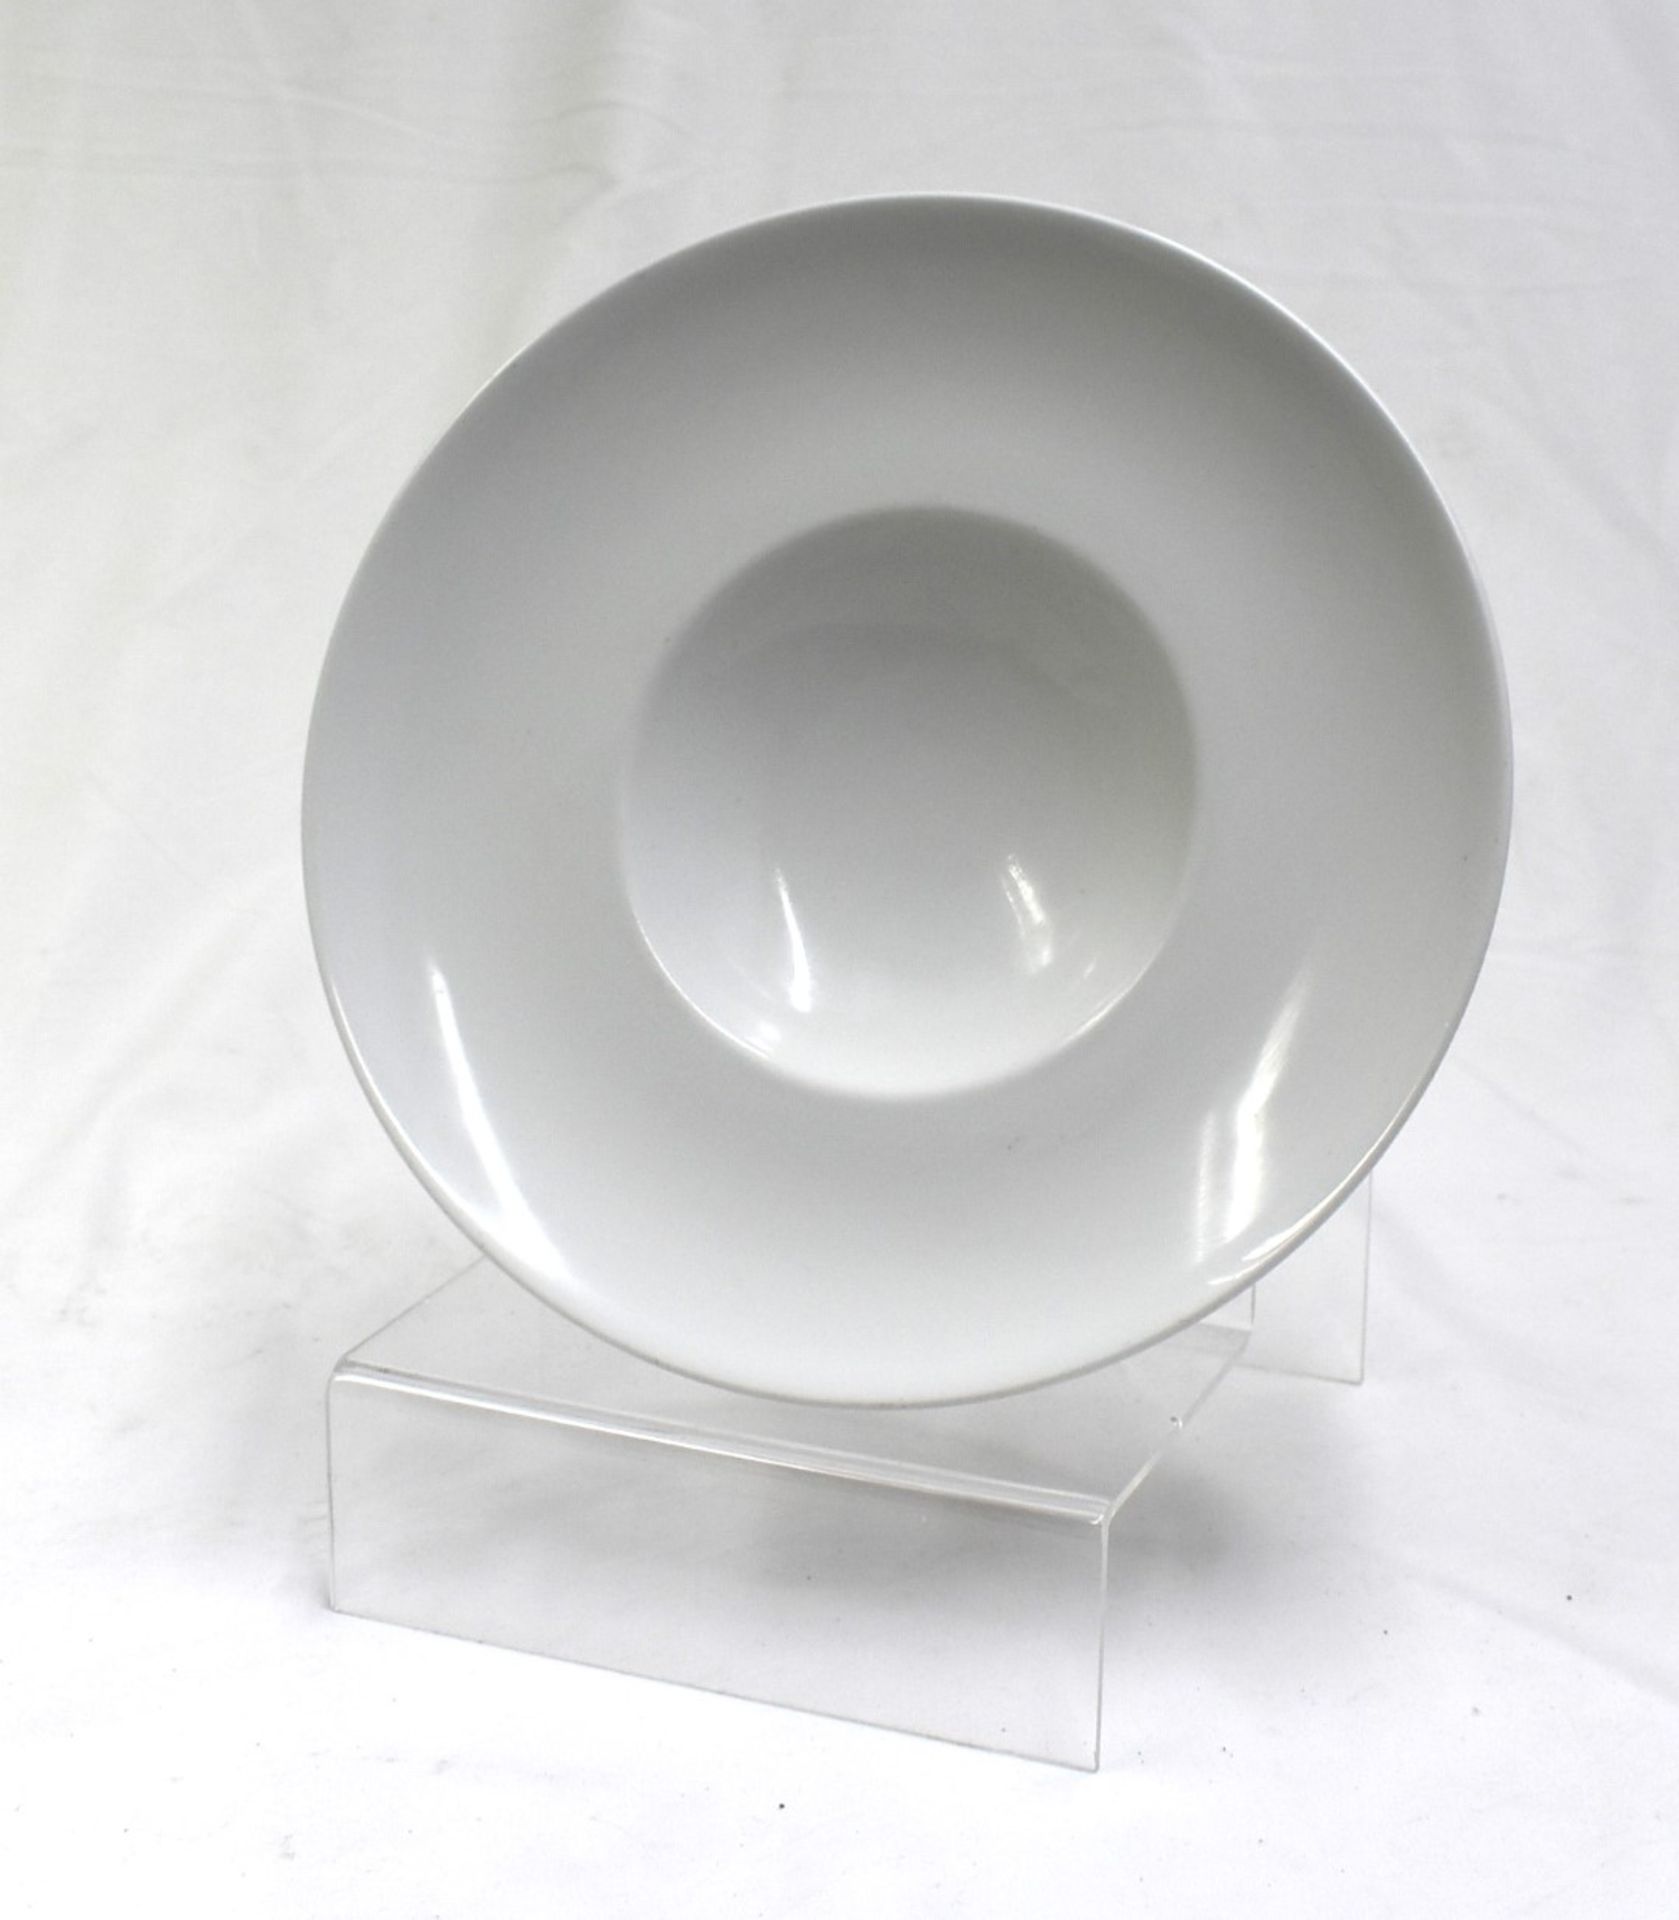 6 x Pillivuyt French Porcelain Wide Rim Dinner Bowls - 26cm Diameter - CL011 - Ref: PX279 - - Image 4 of 5